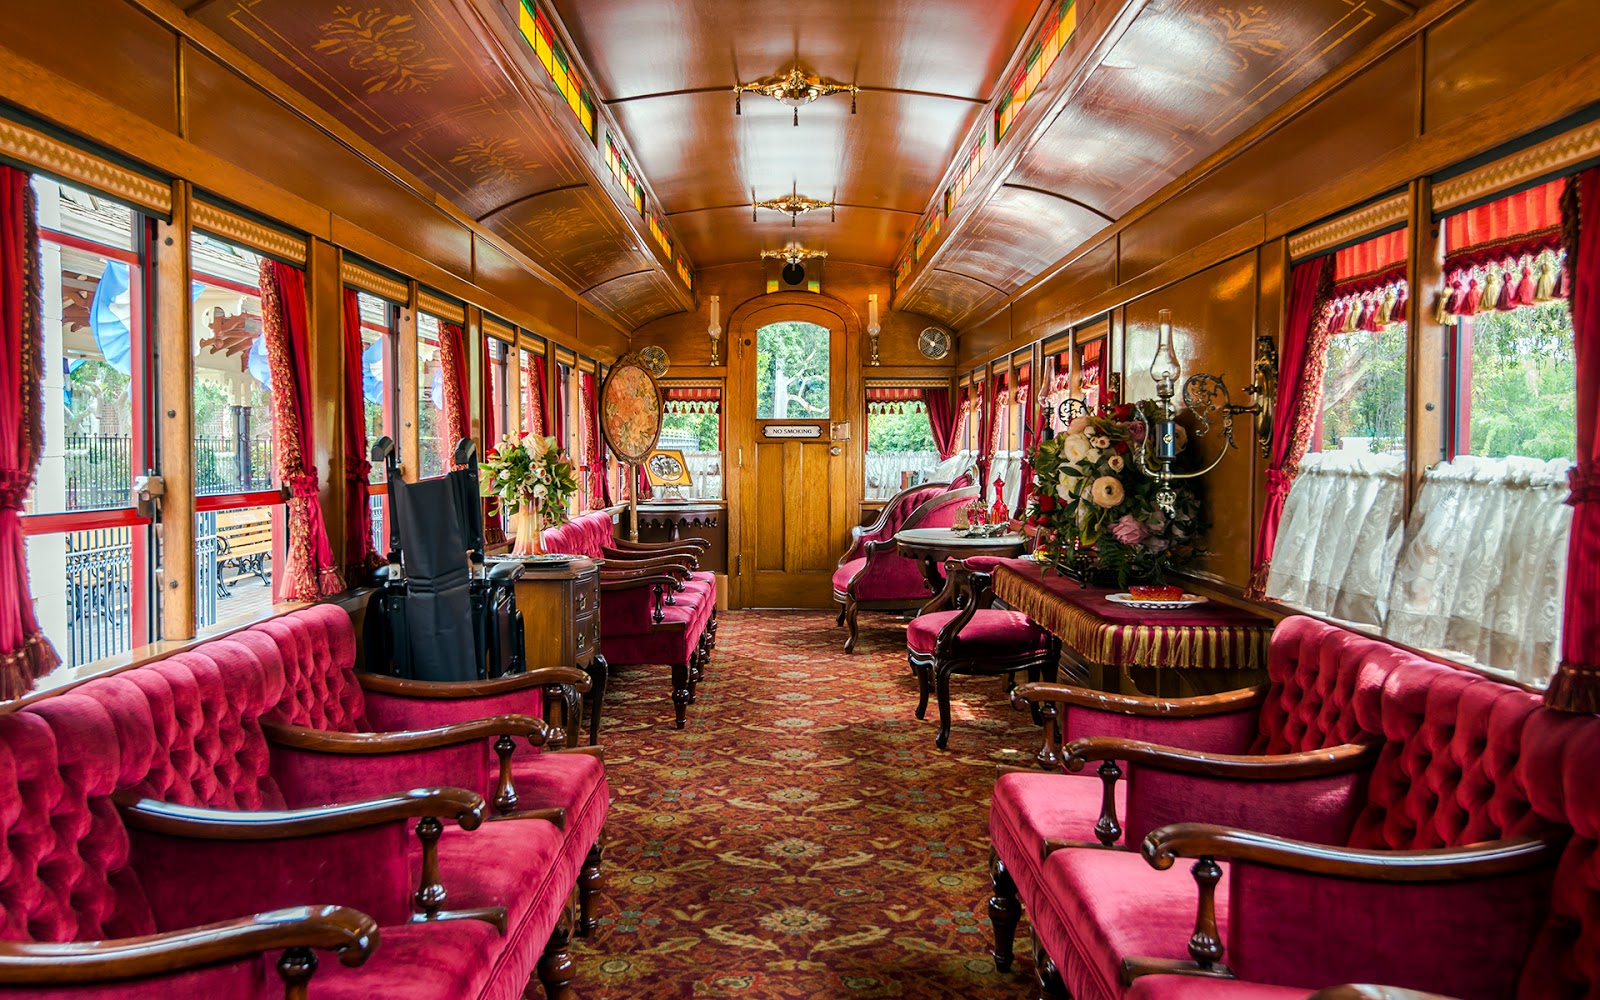 Walt Disney World Railroad 'Lilly Belle' Testing in the Magic